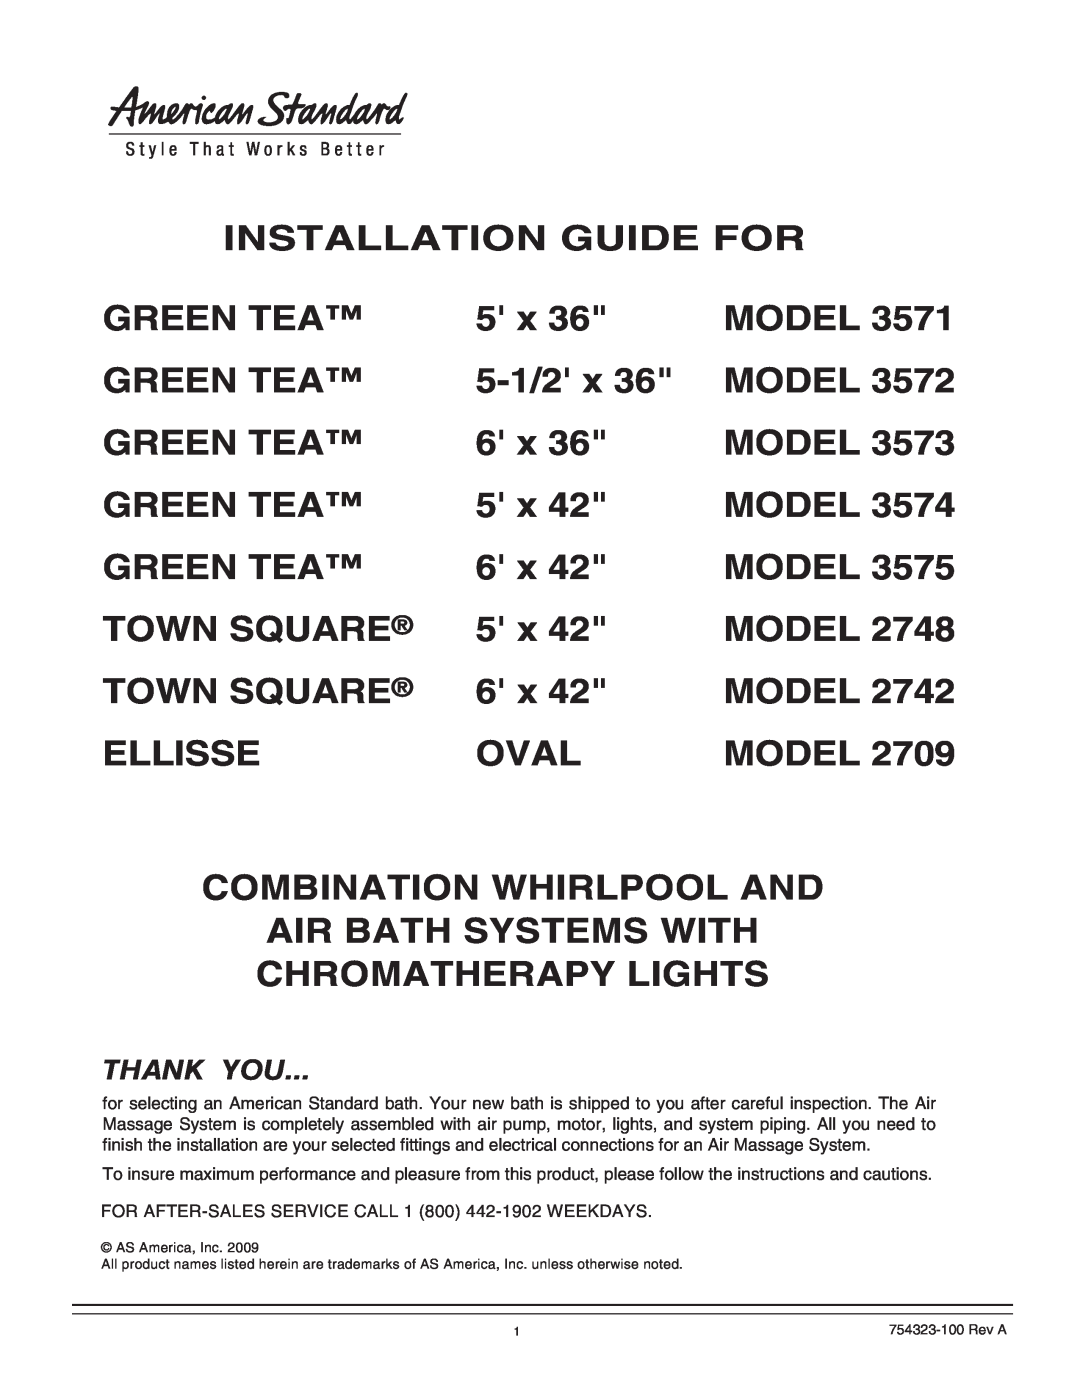 American Standard 754323-100 Rev A, American Standard bath manual Installation Guide For 